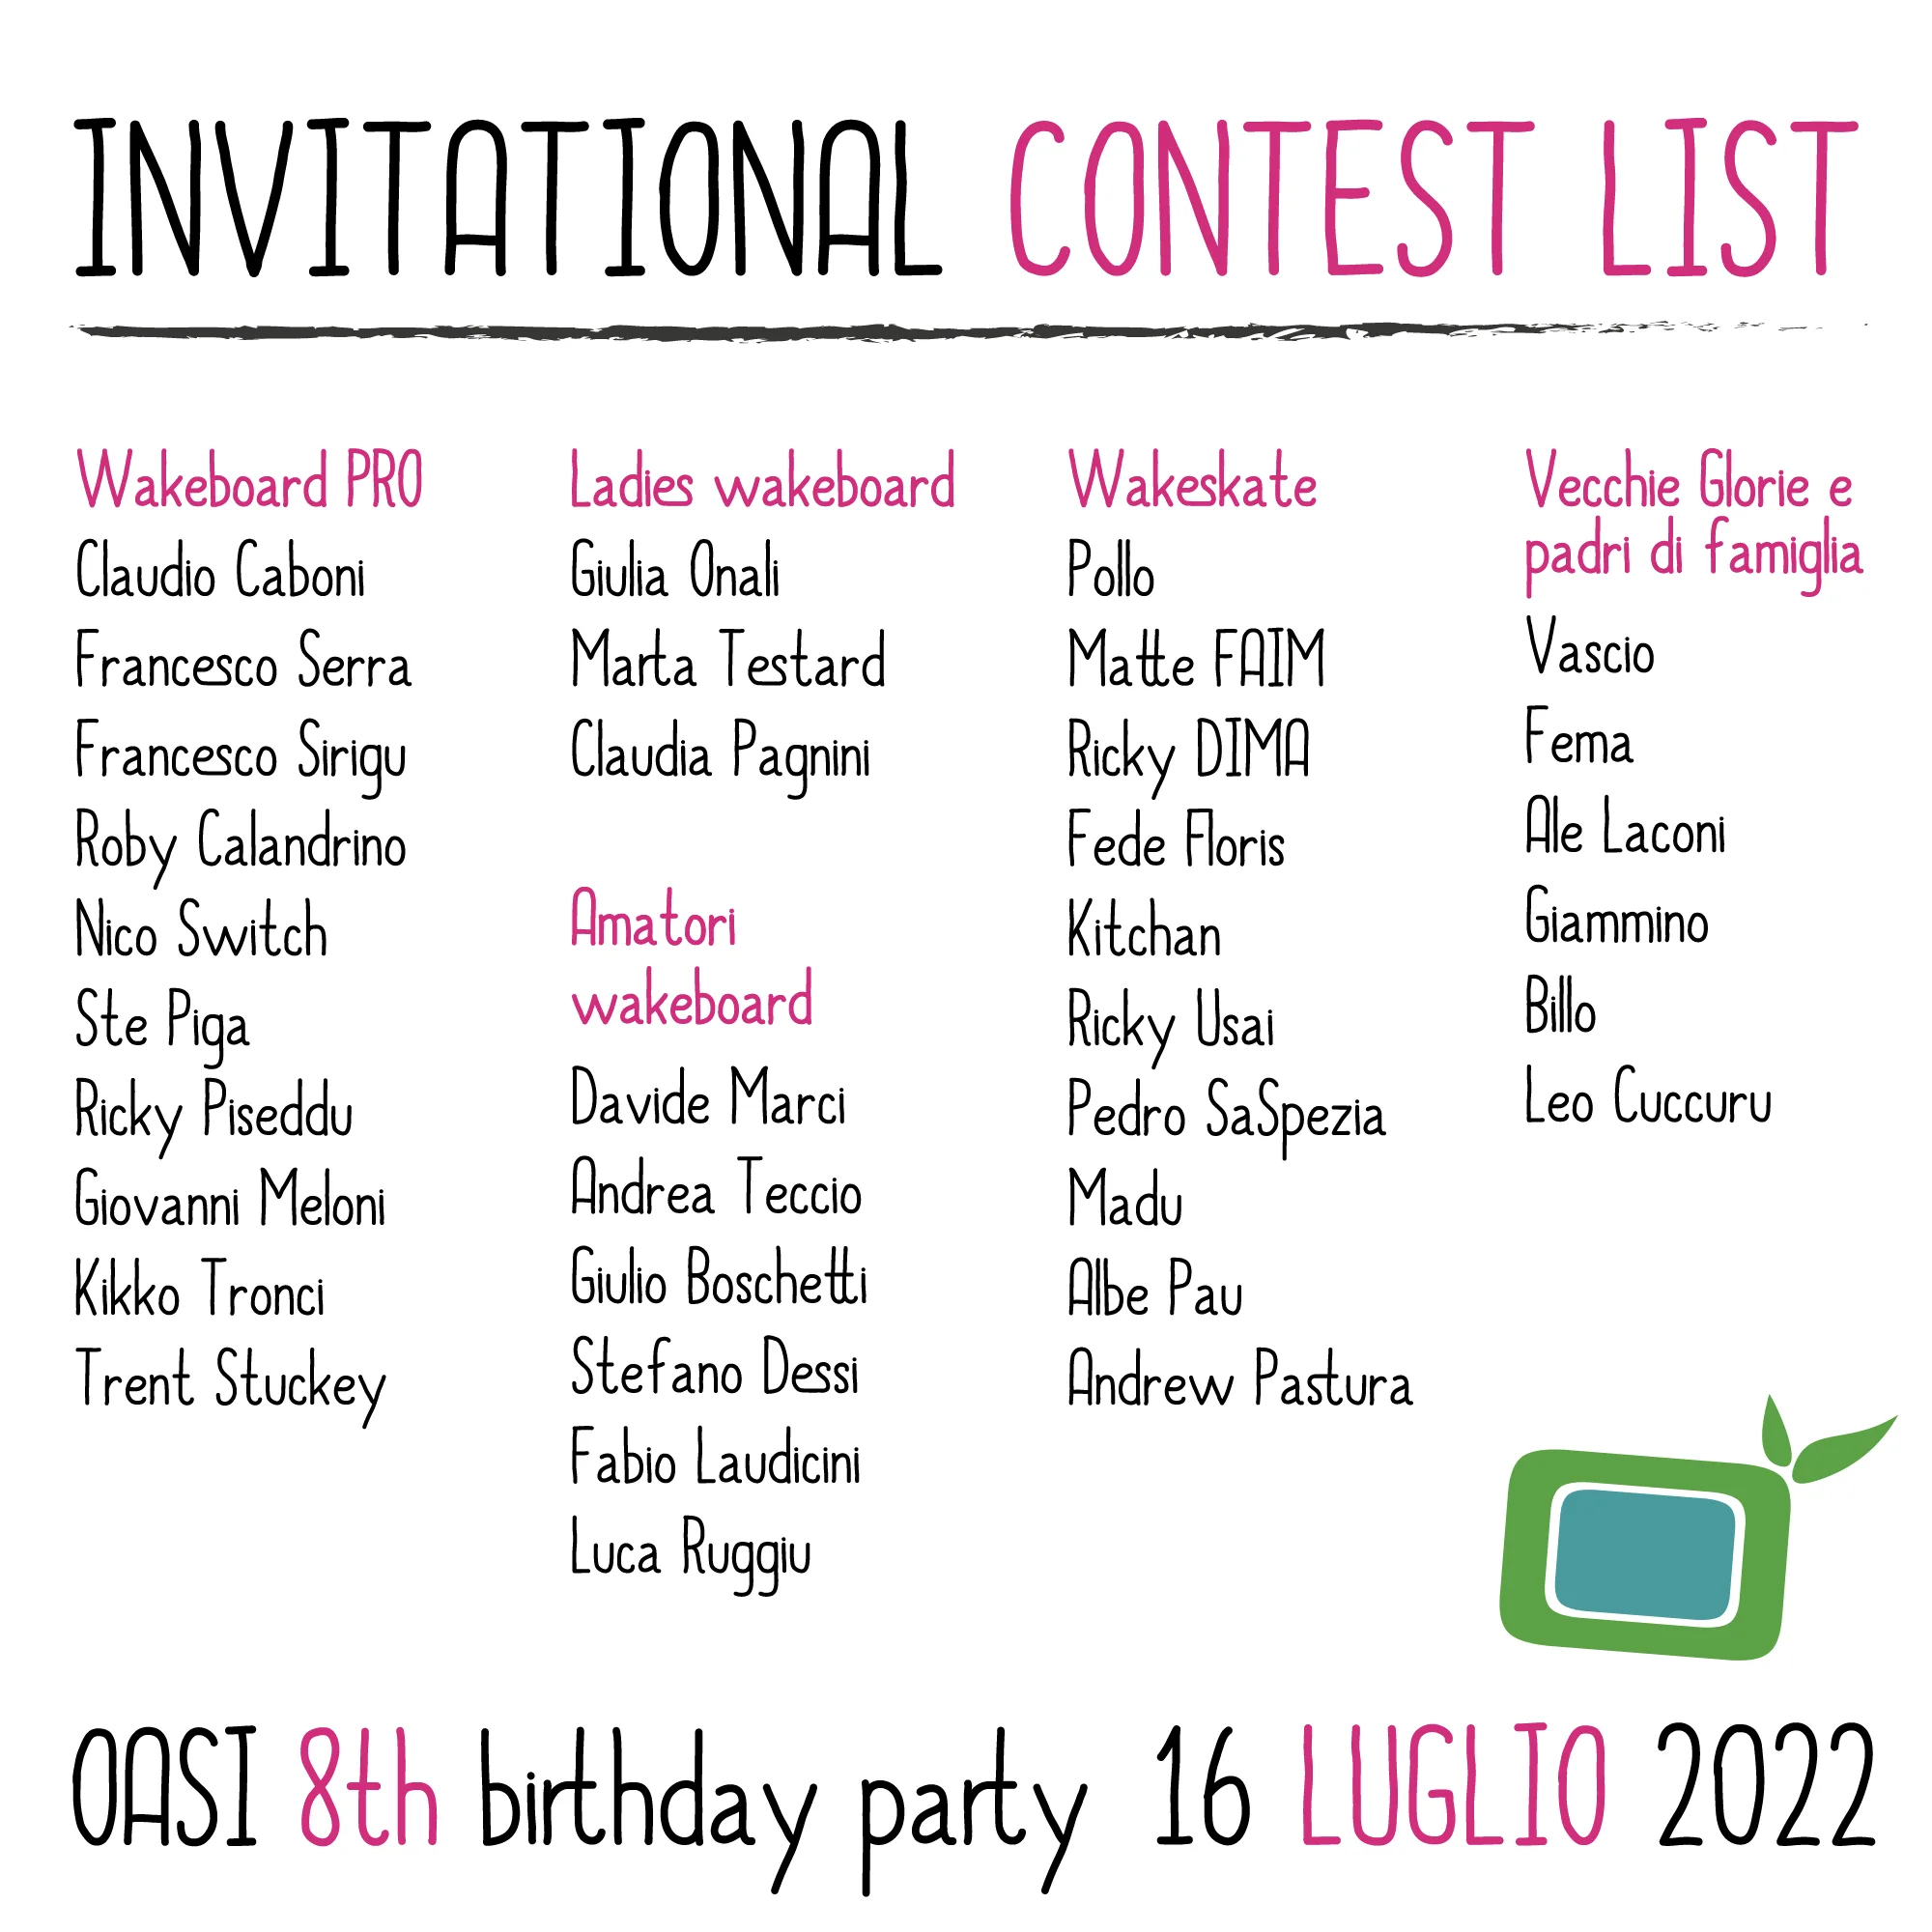 Oasi Wakepark 8th Birthday Party, 16 Luglio 2022 locandina wake invitational 2022 oasiwake 3 1